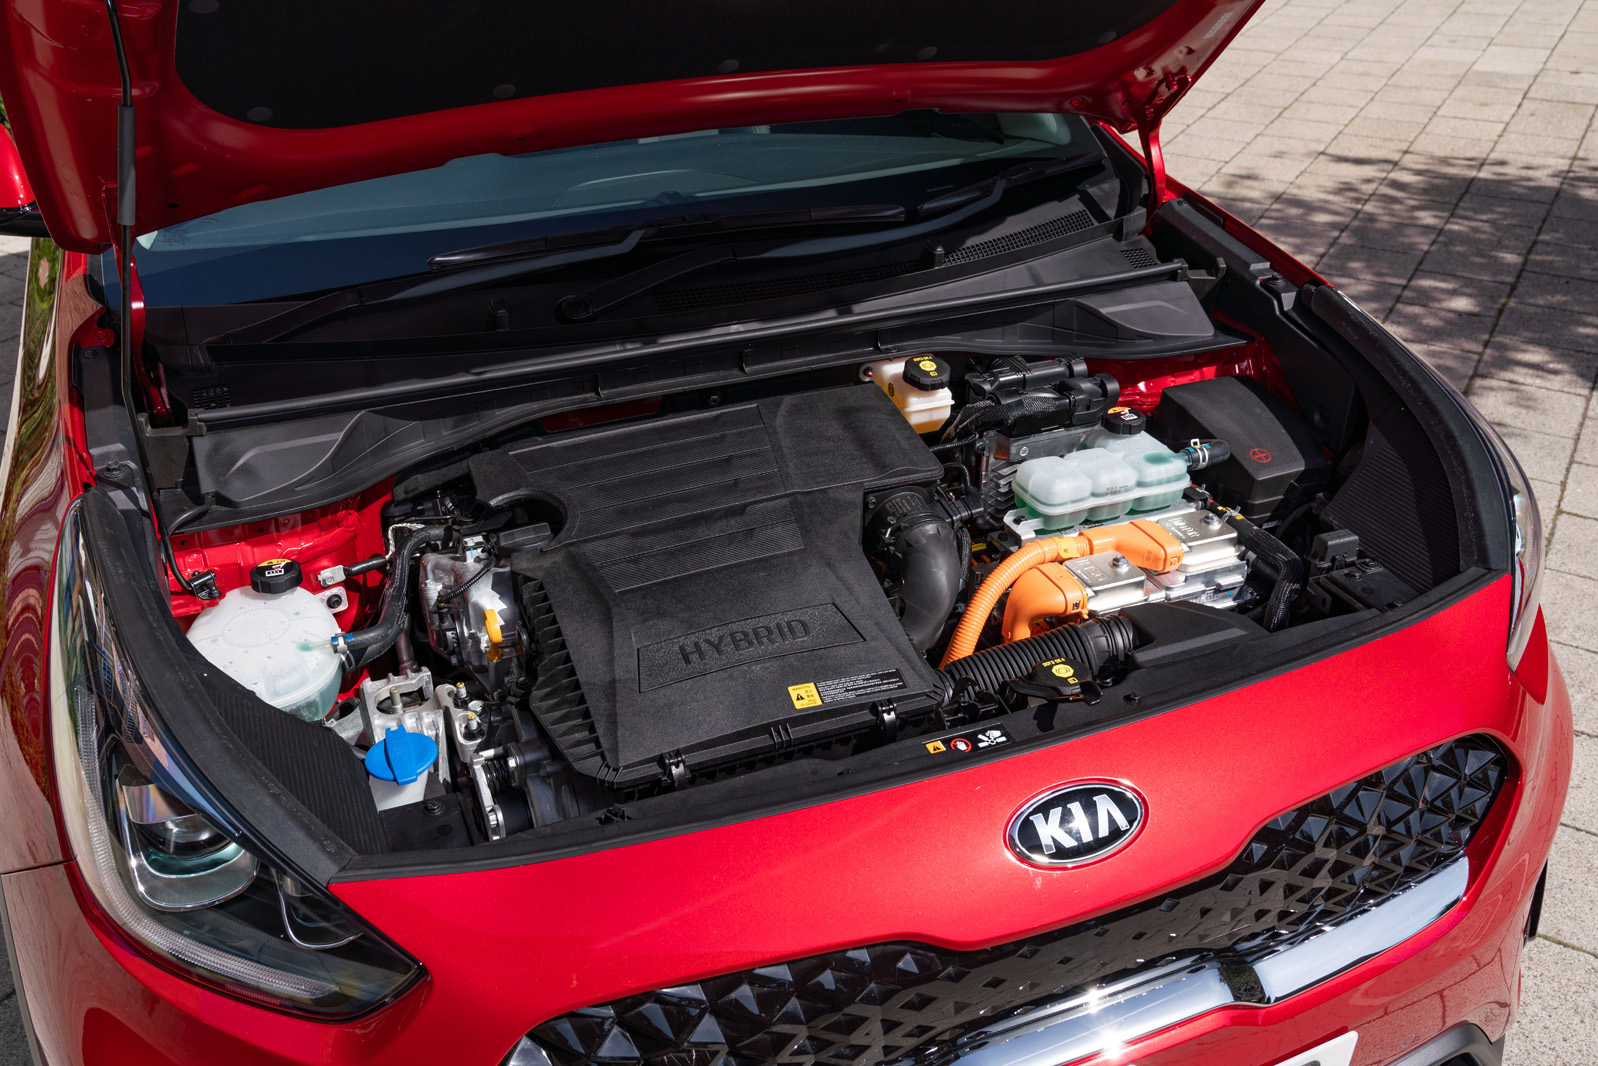 Kia Niro engines & performance Autocar